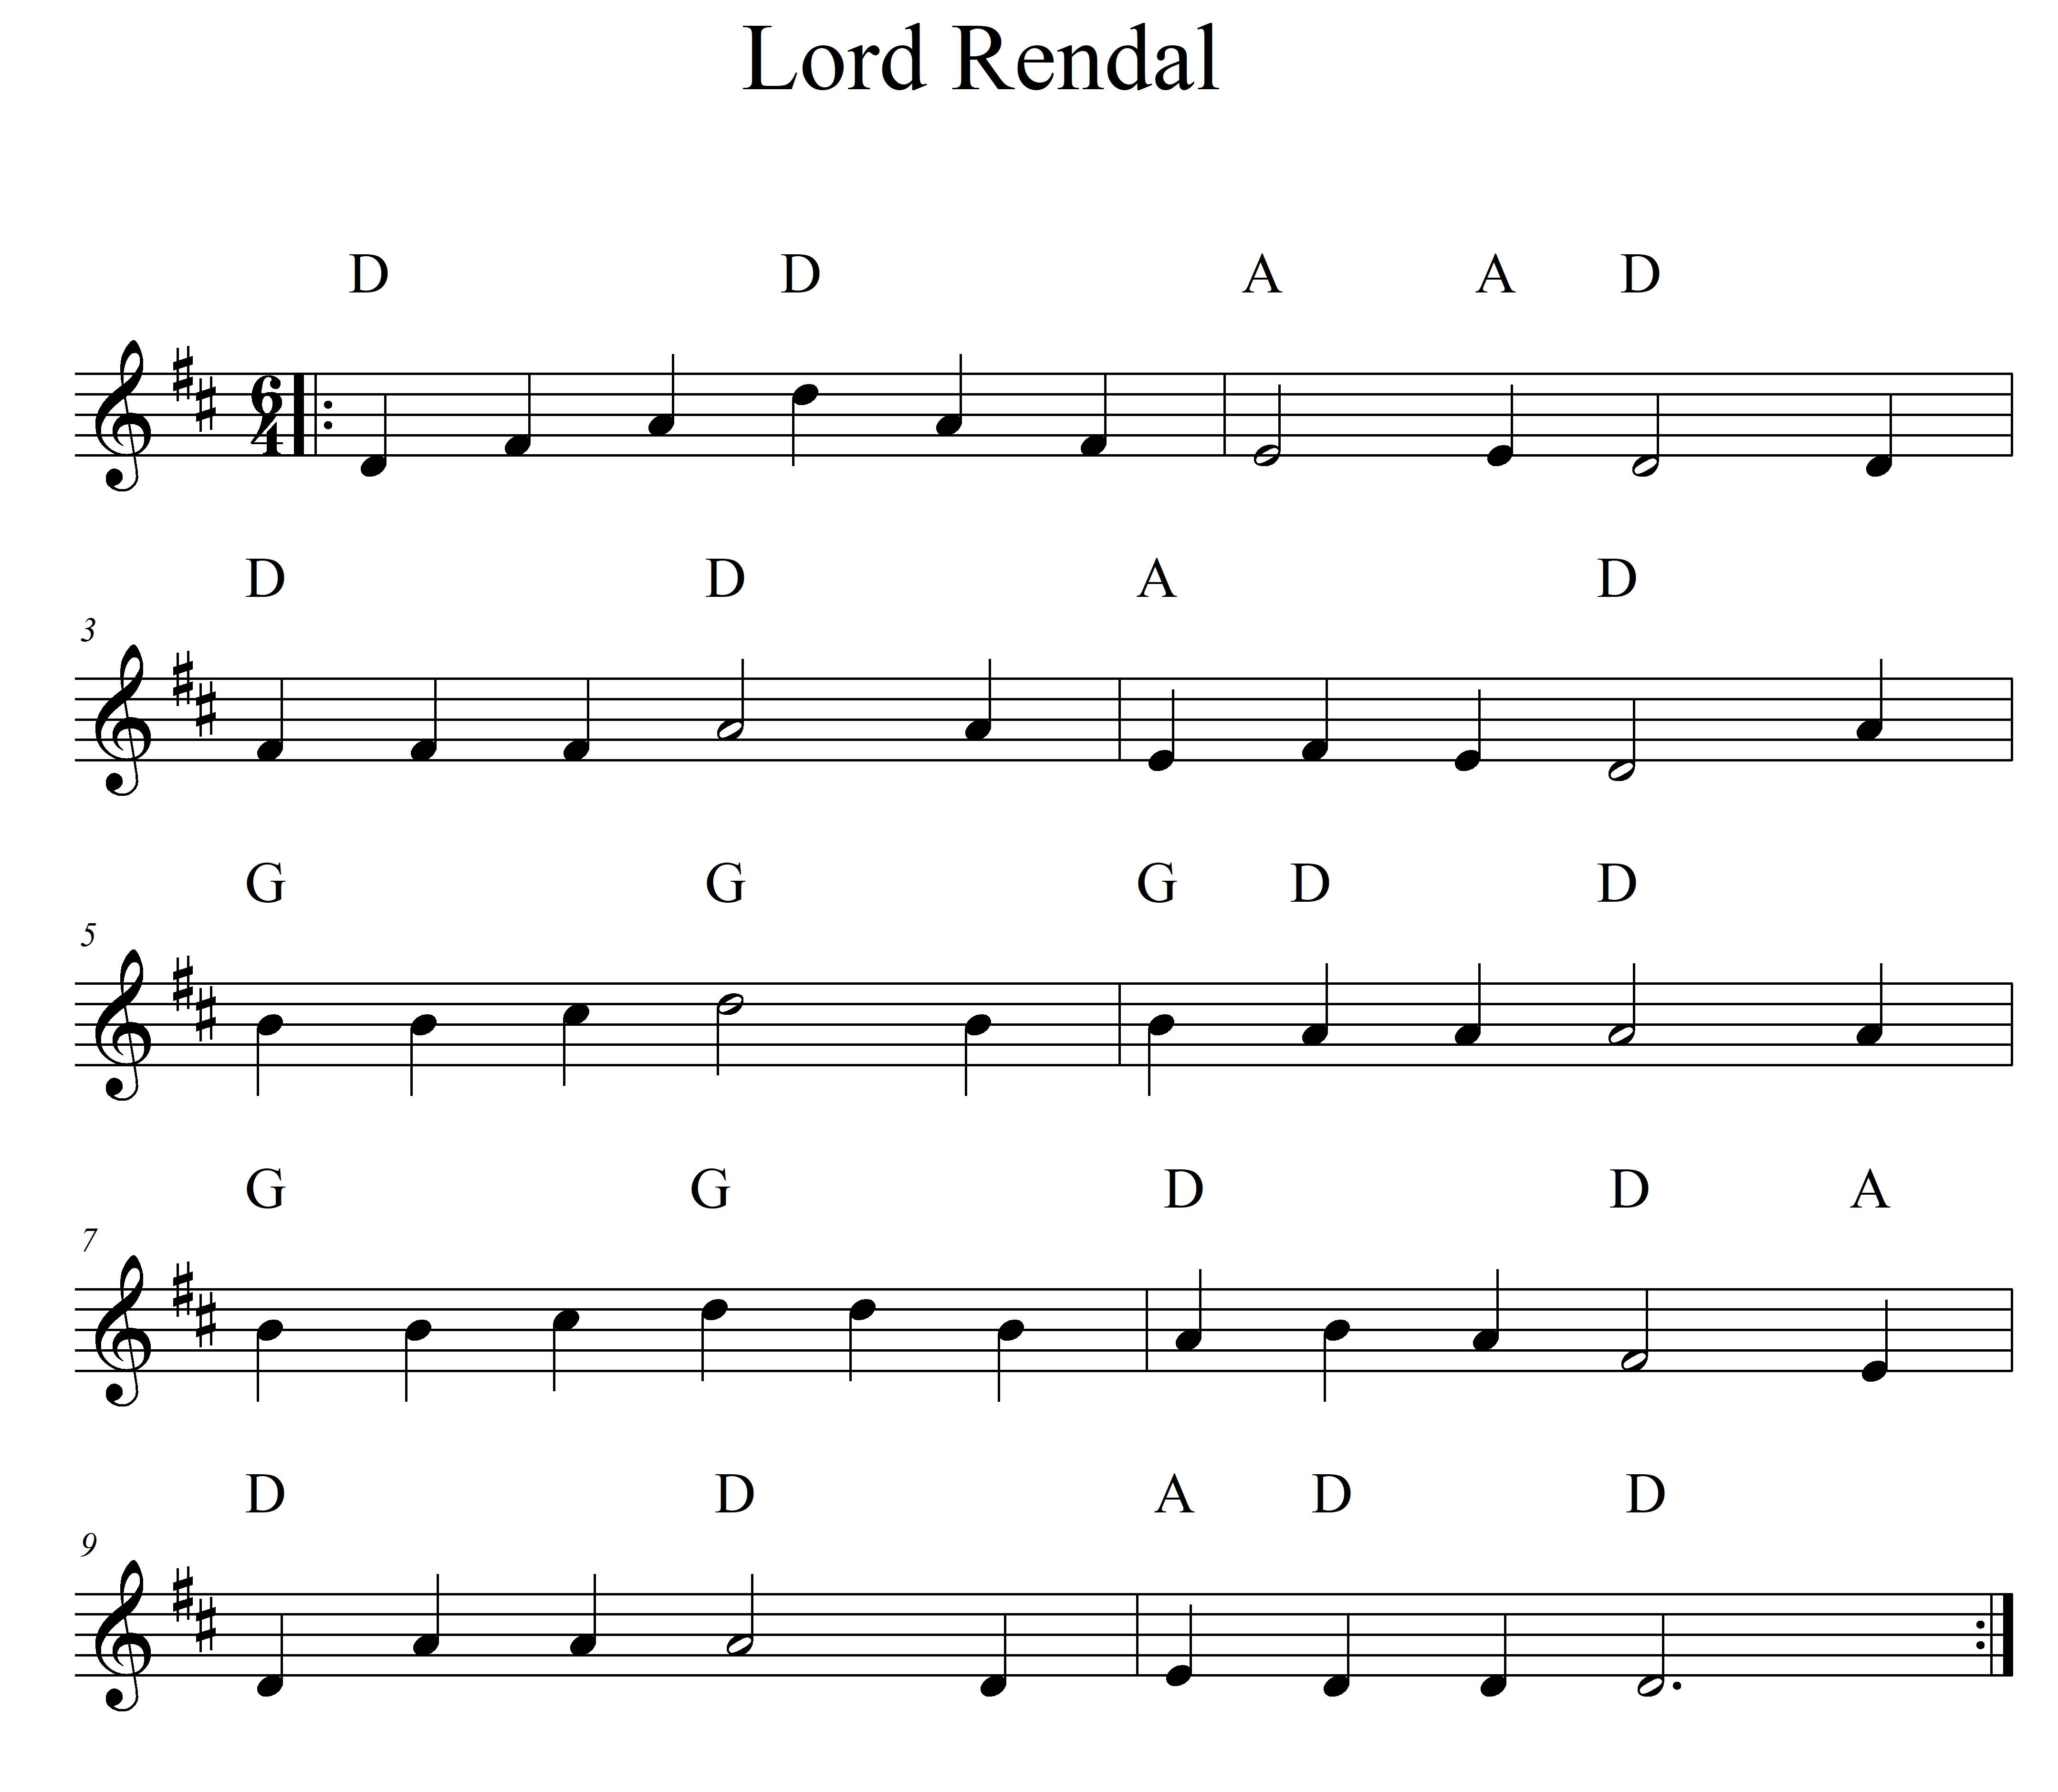 Mandoline lernen - Lord Rendal